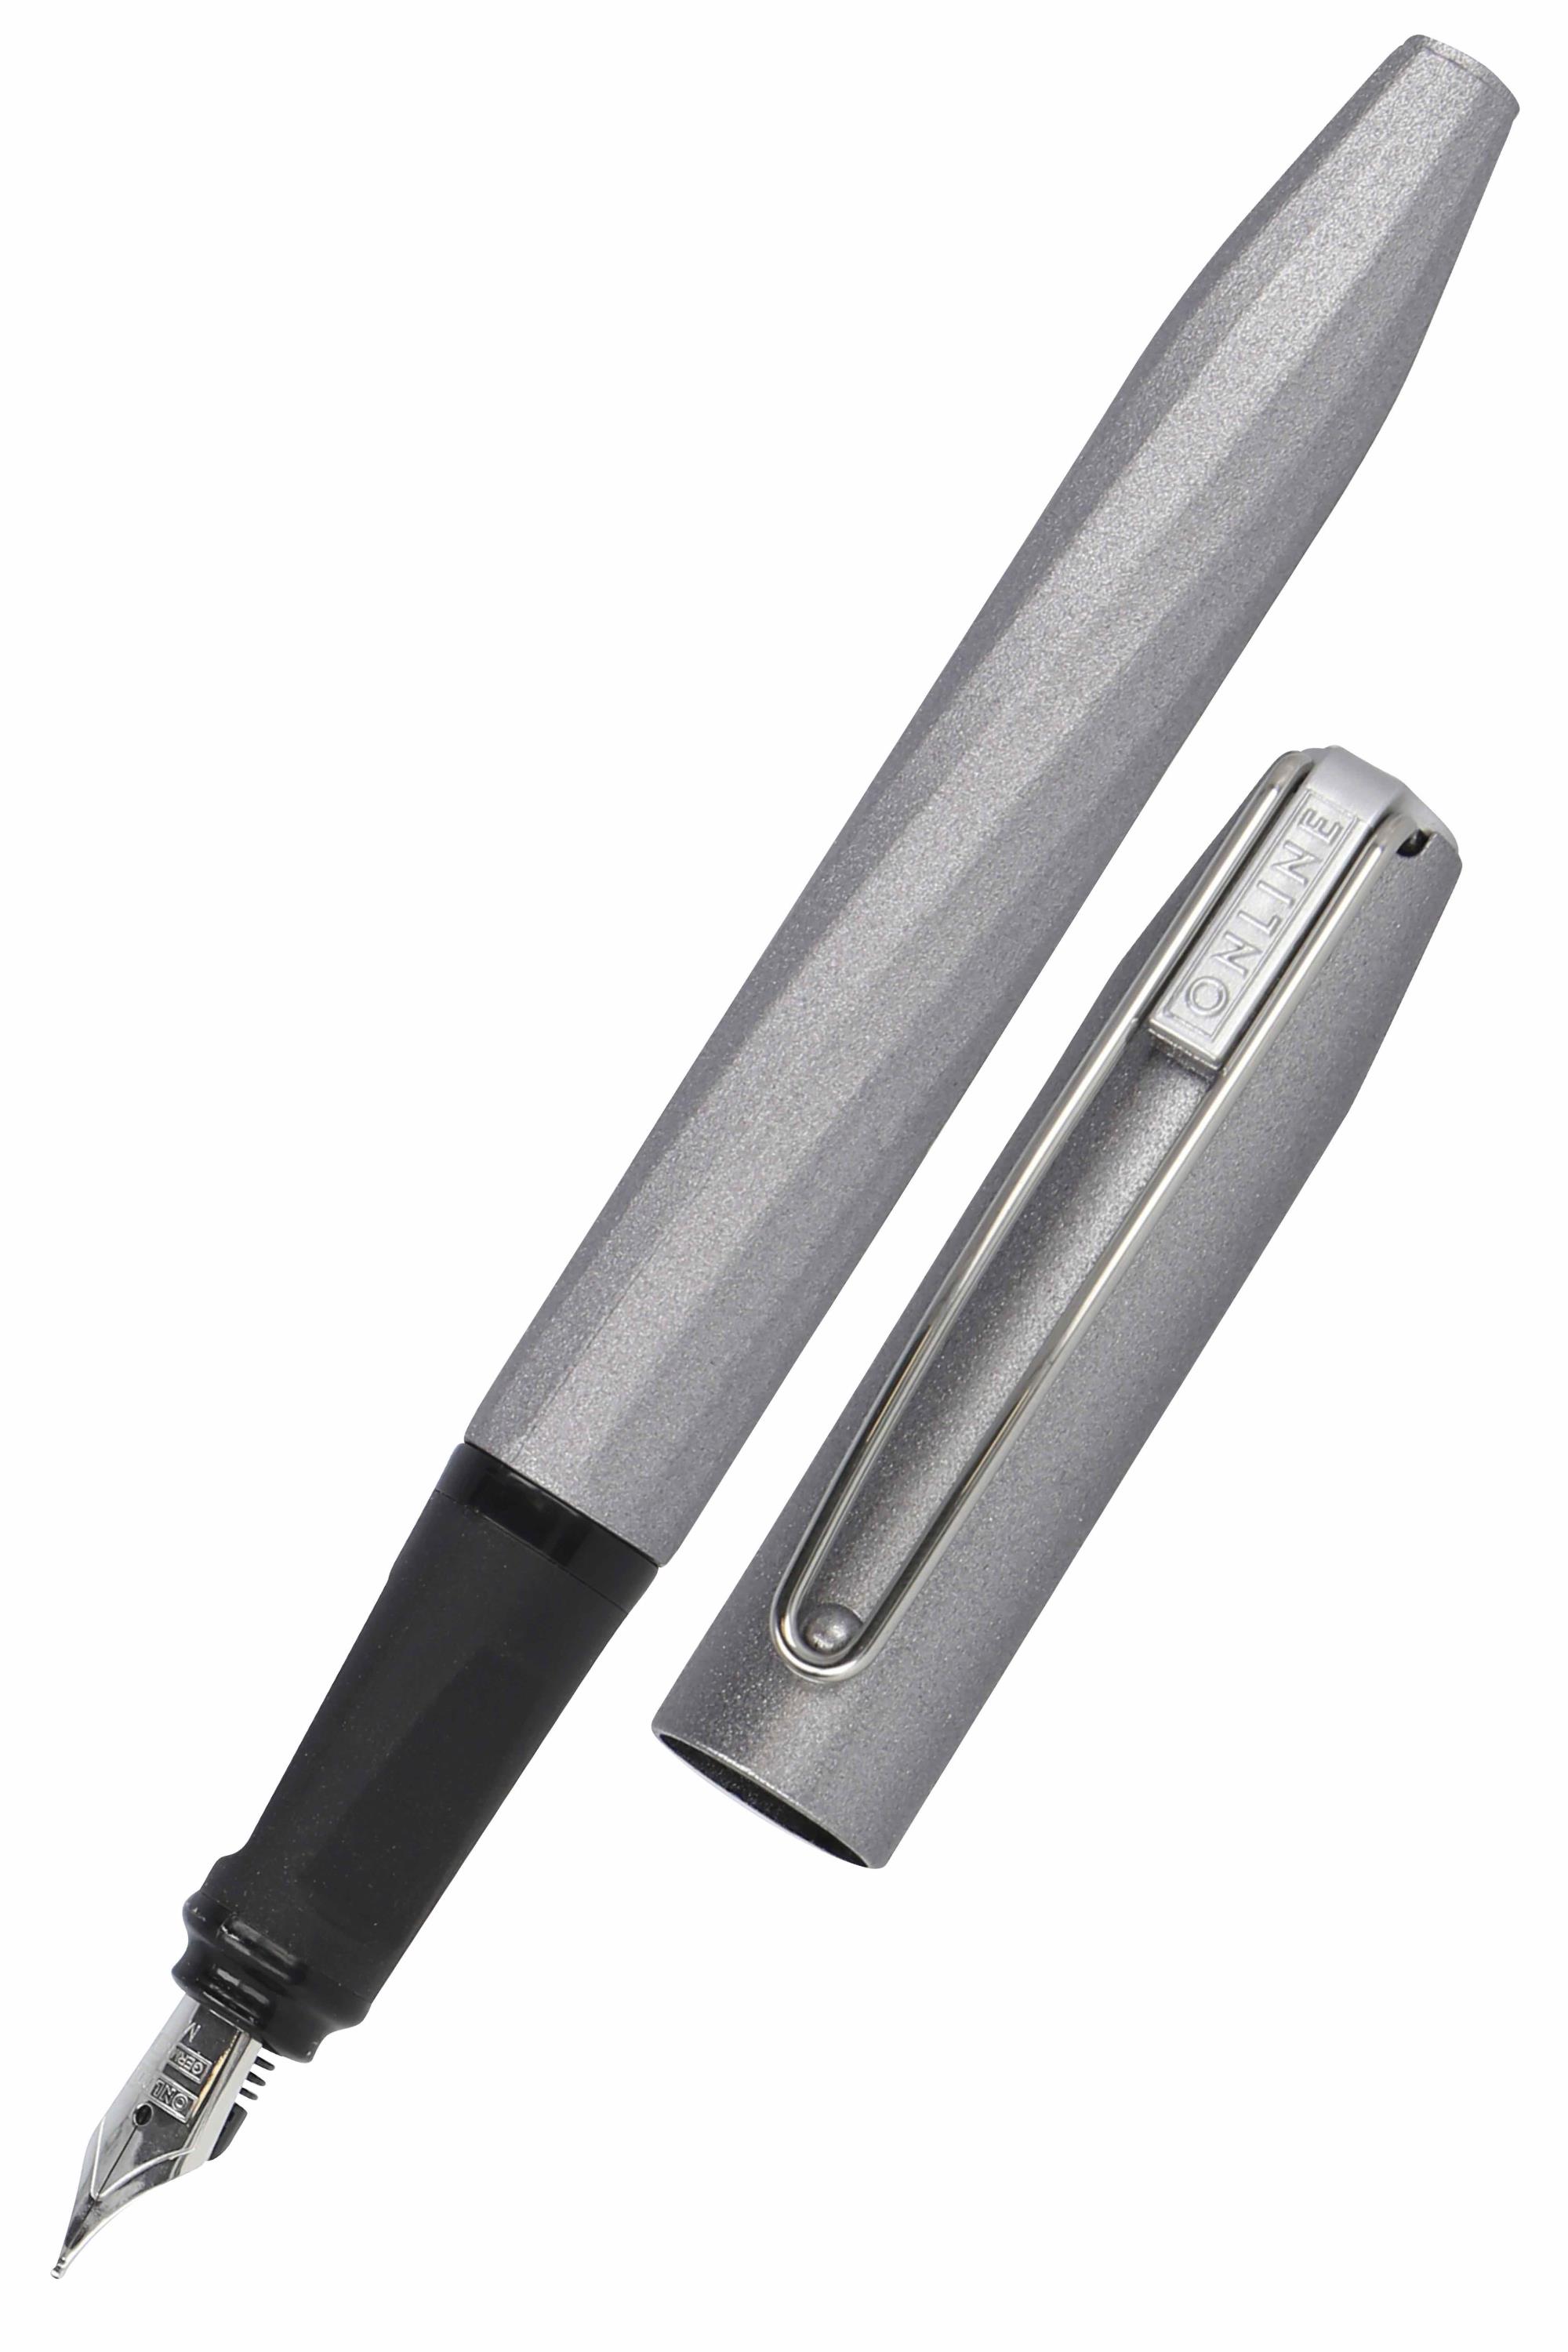 Füller Slope Metallic Grey